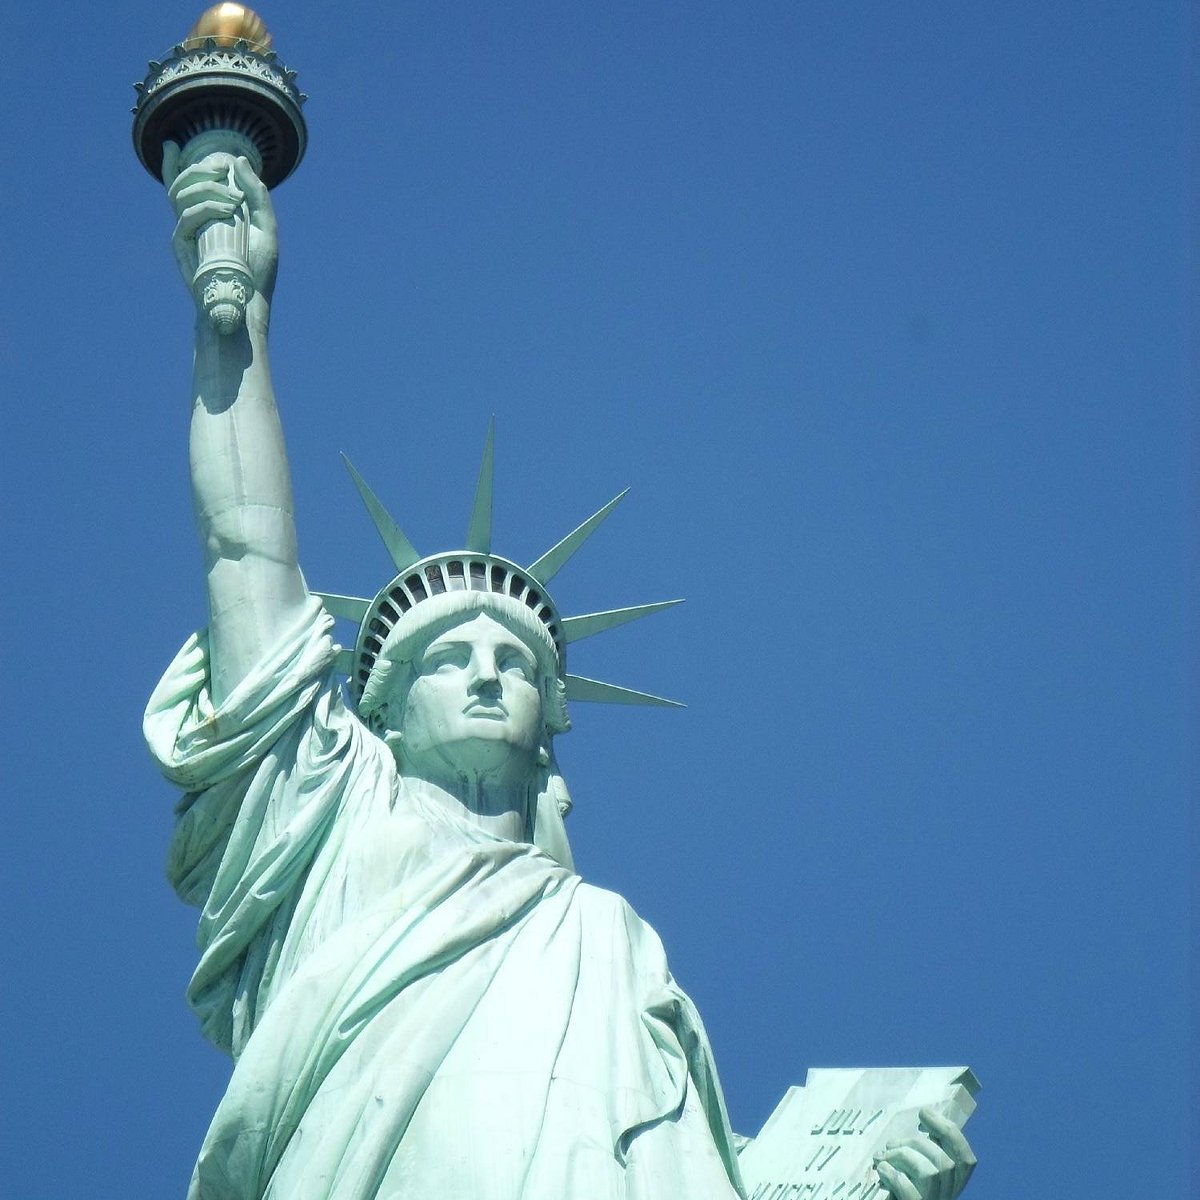 https://dynamic-media-cdn.tripadvisor.com/media/photo-o/04/ba/d3/e8/statue-of-liberty_rotated_90.jpg?w=1200&h=1200&s=1